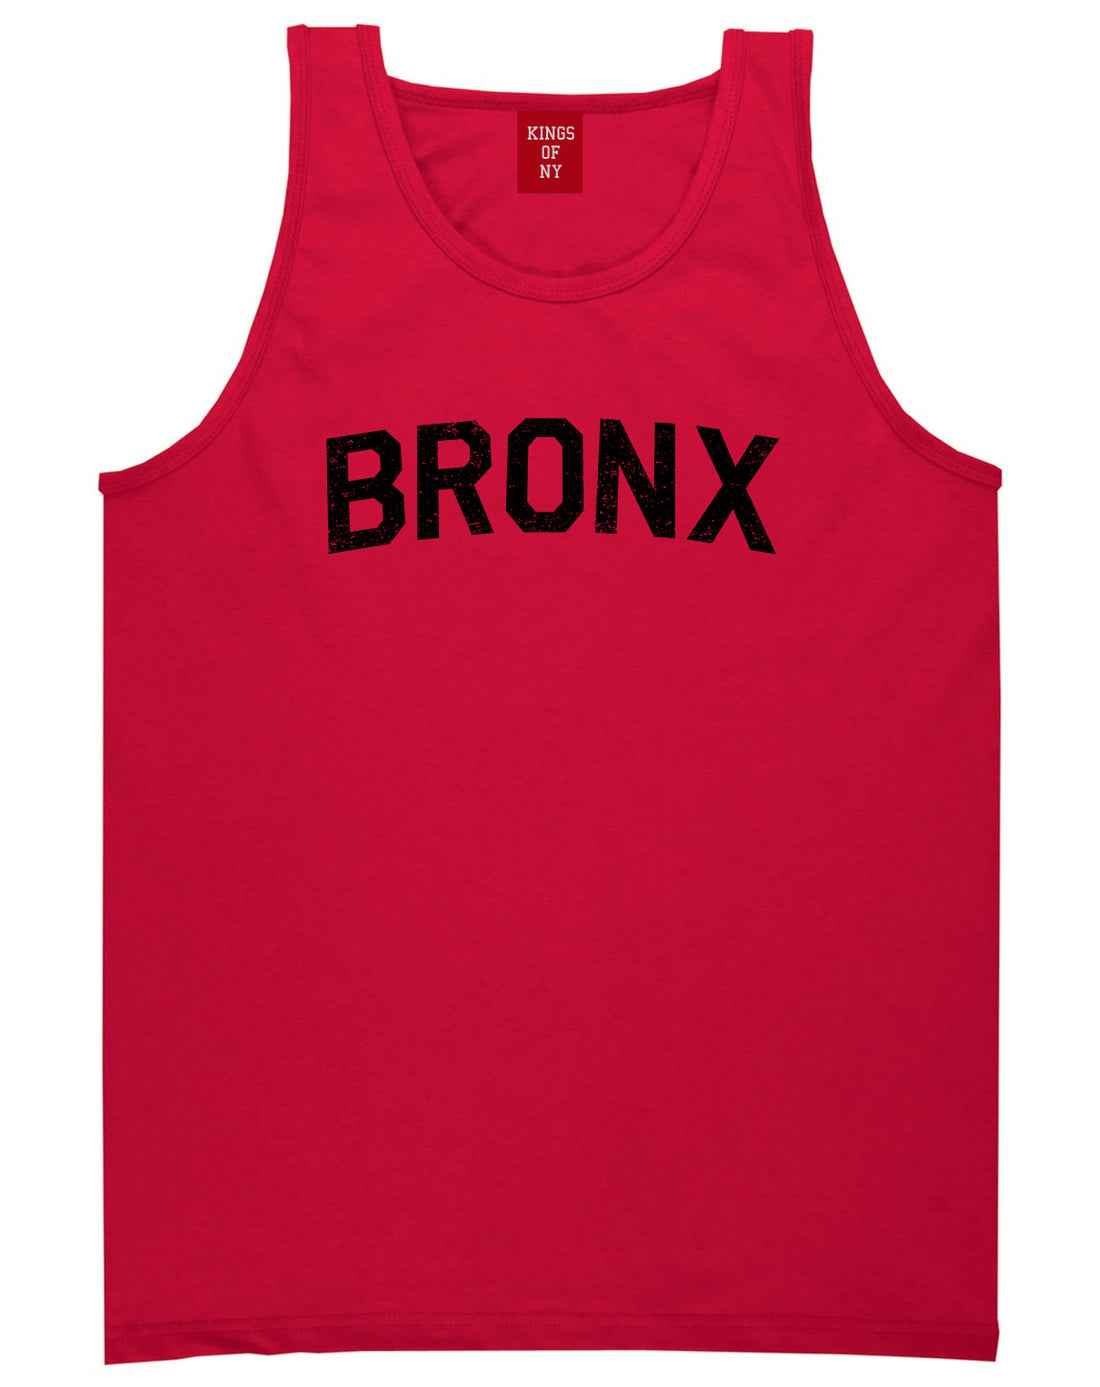 Vintage Bronx New York Mens Tank Top T-Shirt Red